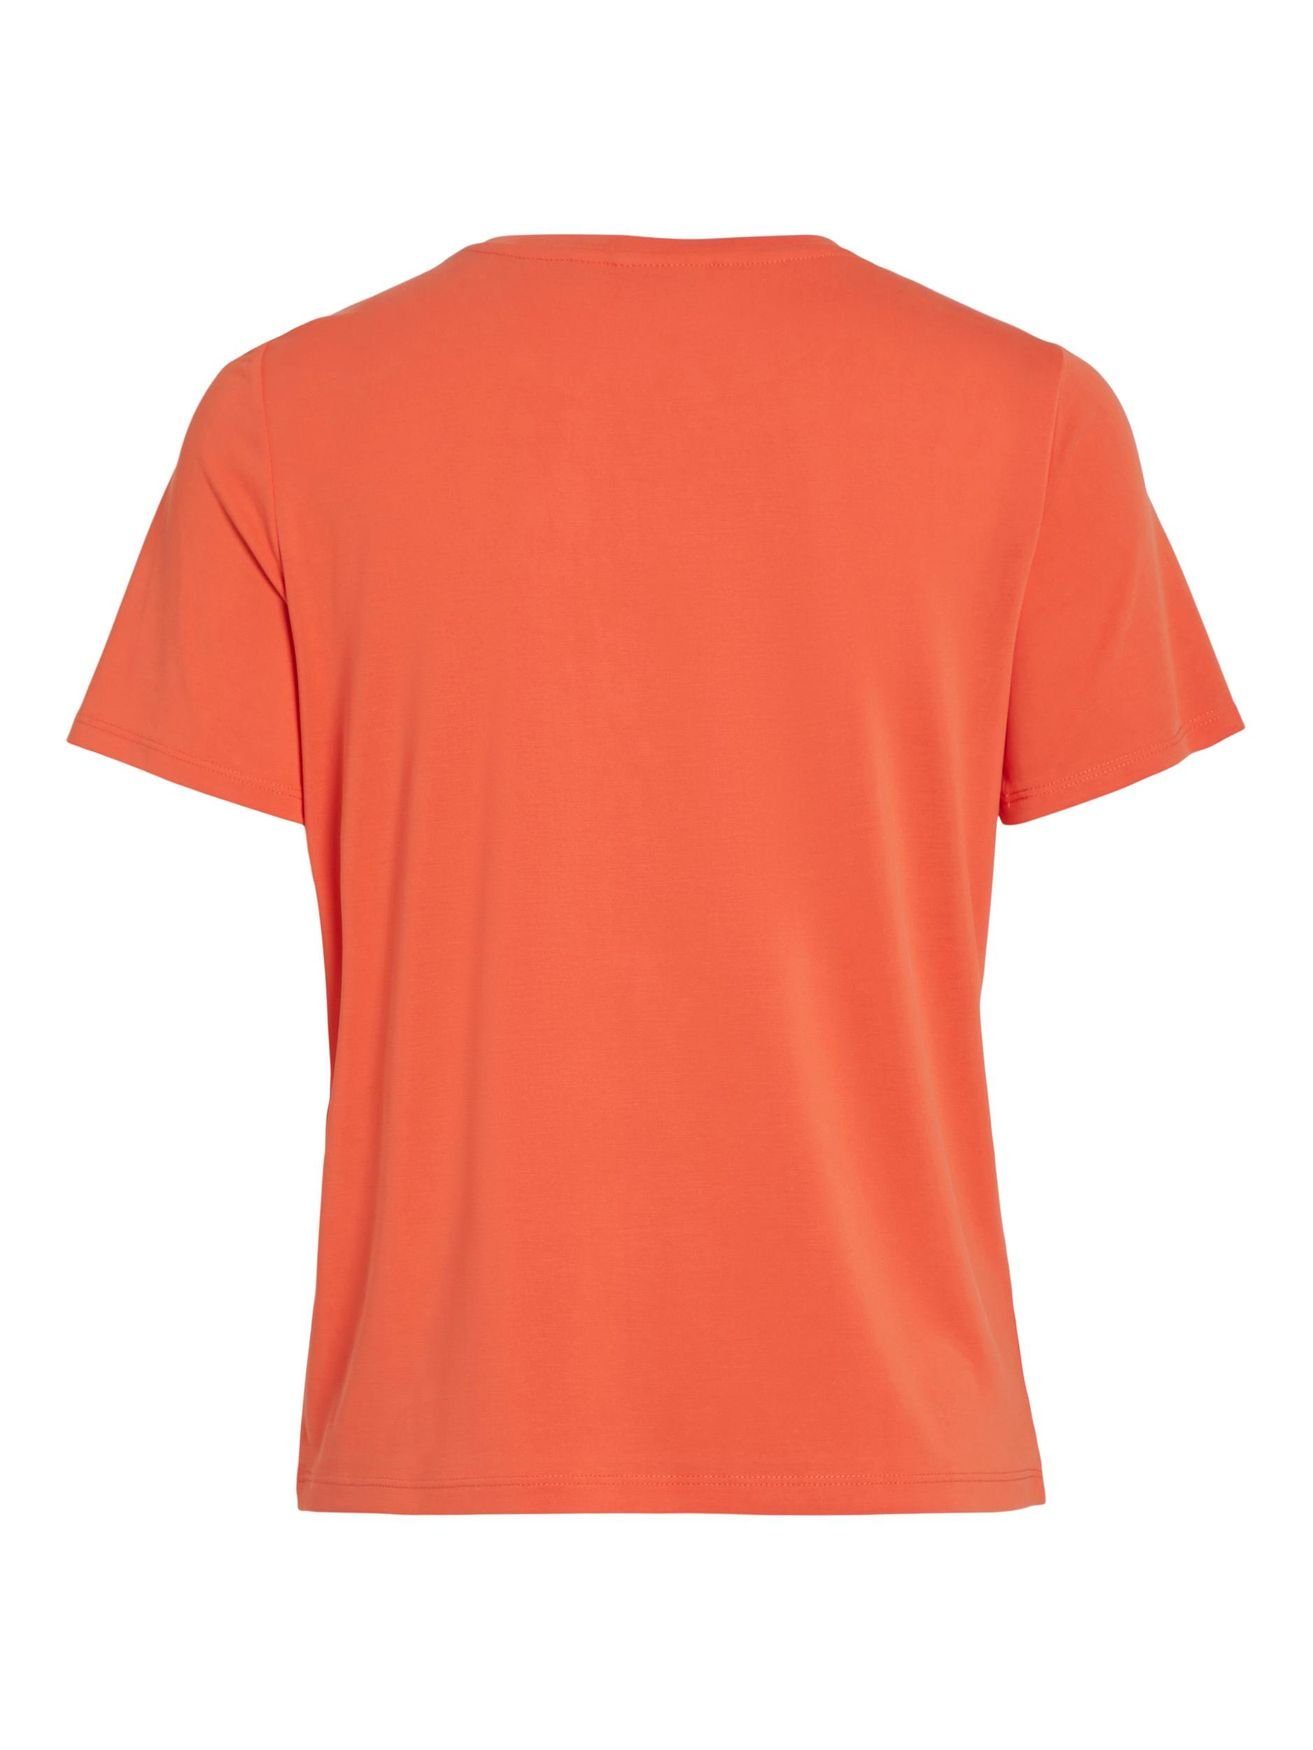 Oberteil Orange T-Shirt Top Basic 4870 VIMODALA T-Shirt Kurzarm in Rundhals Vila